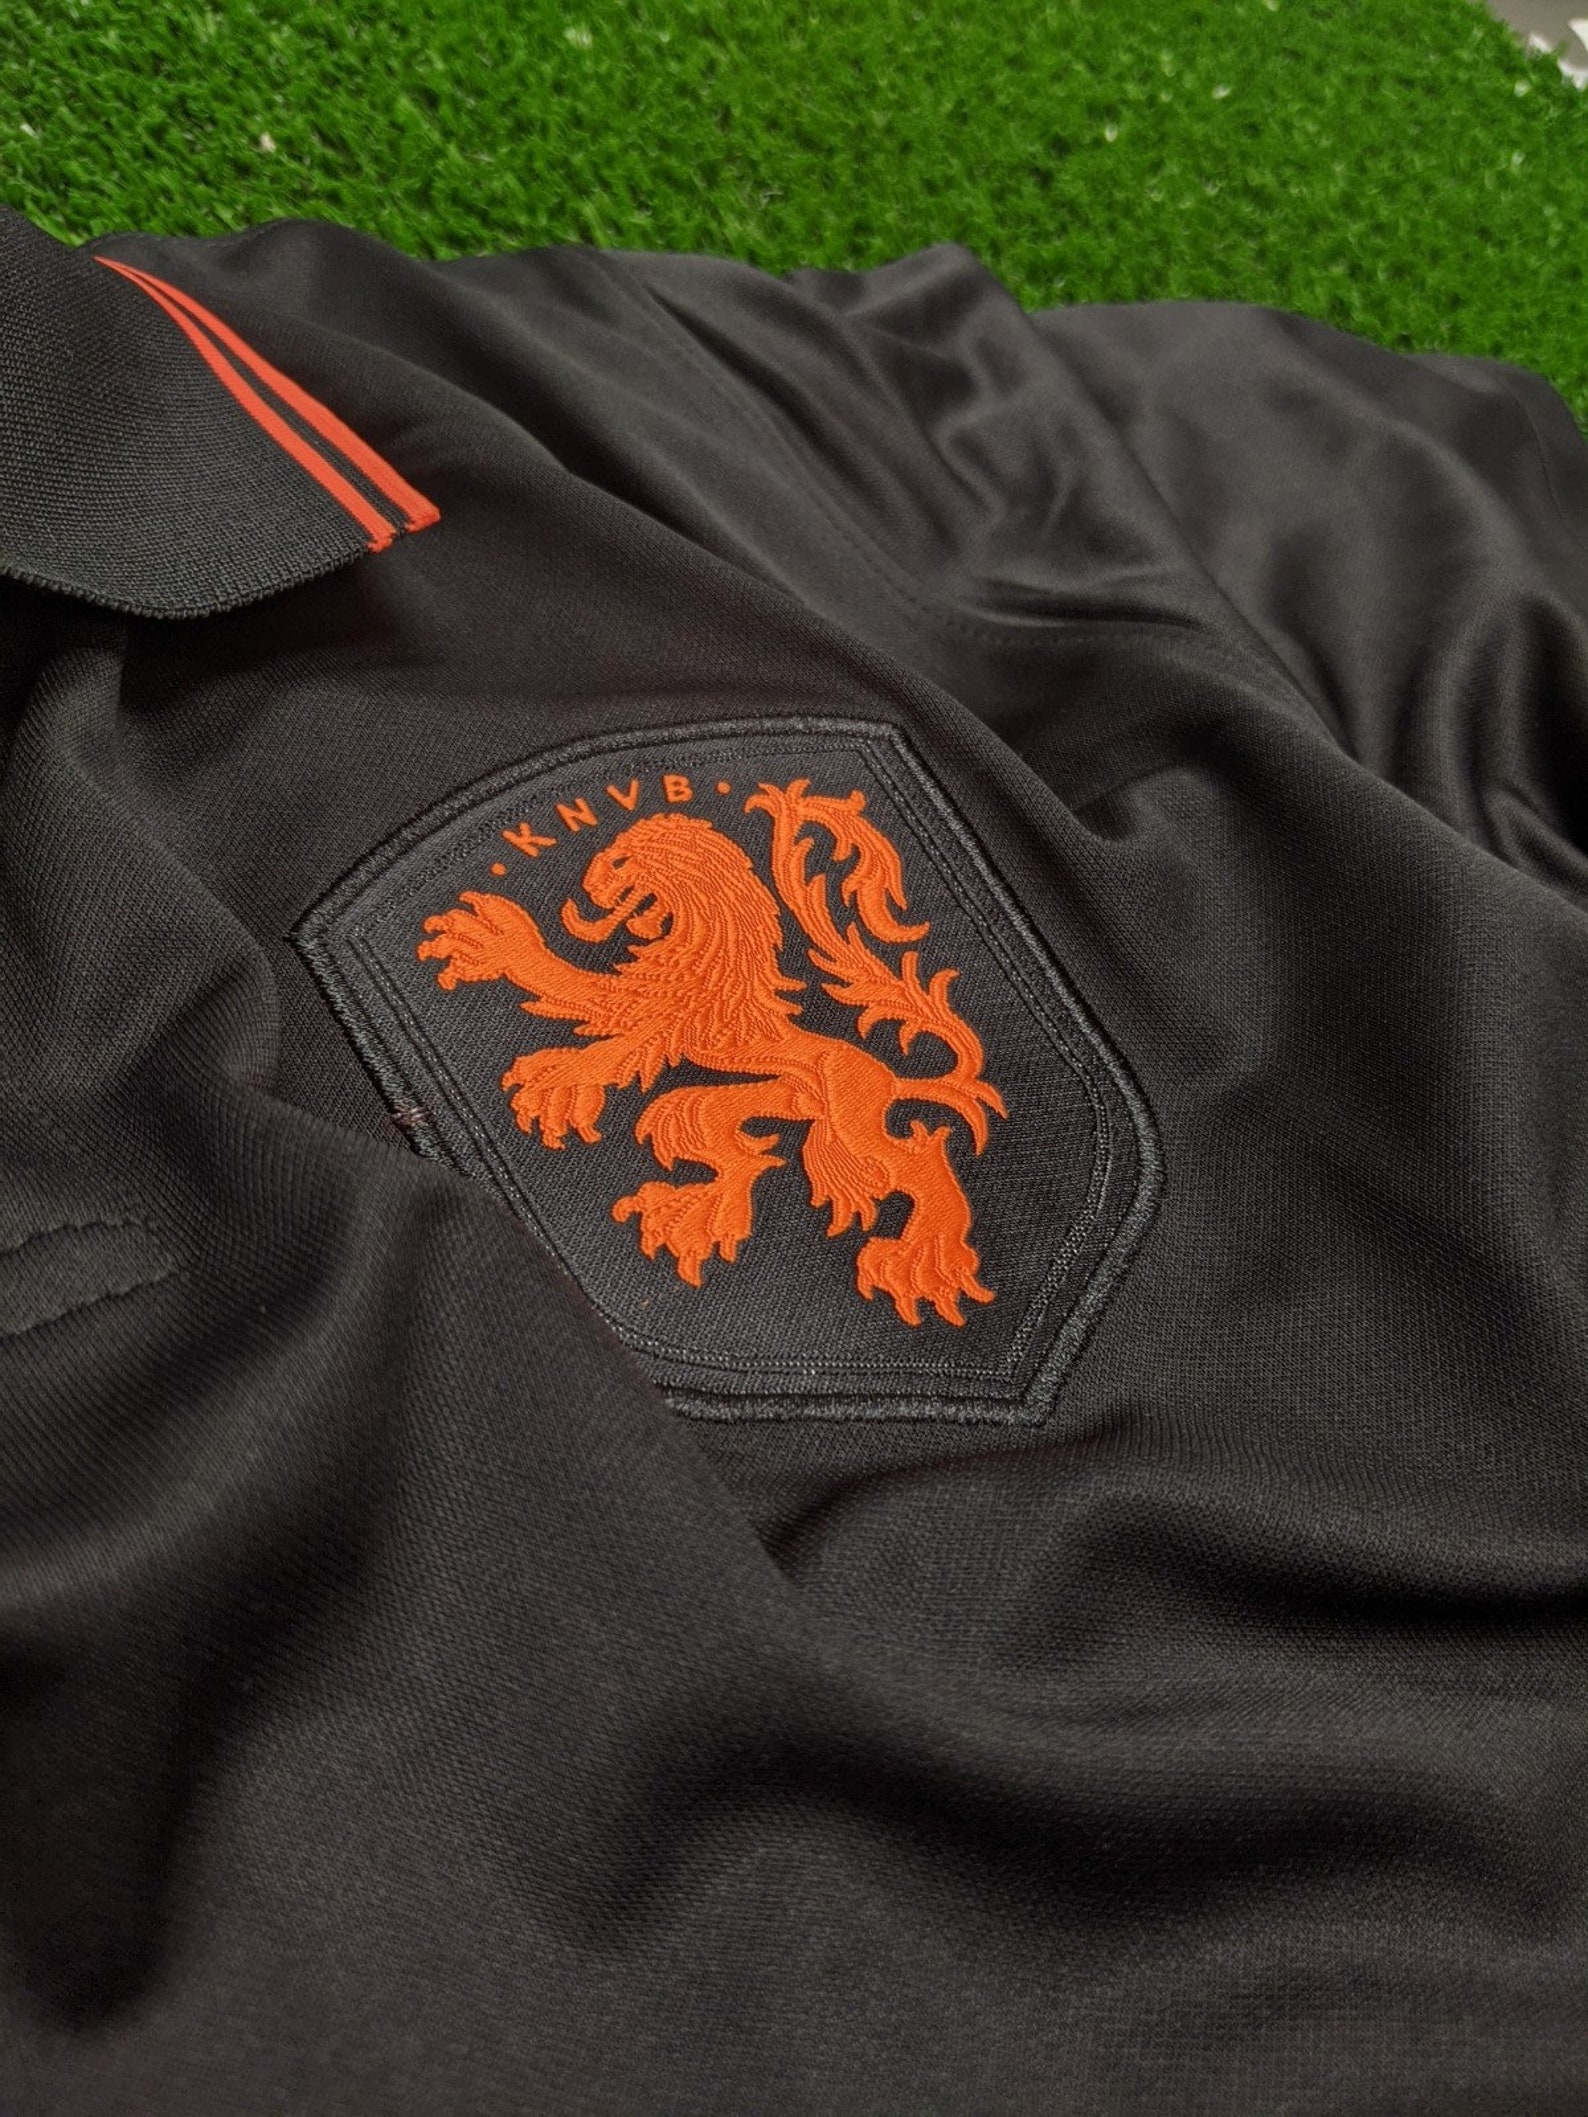 Netherlands National Team Away Visita Jersey 2021 | Etsy